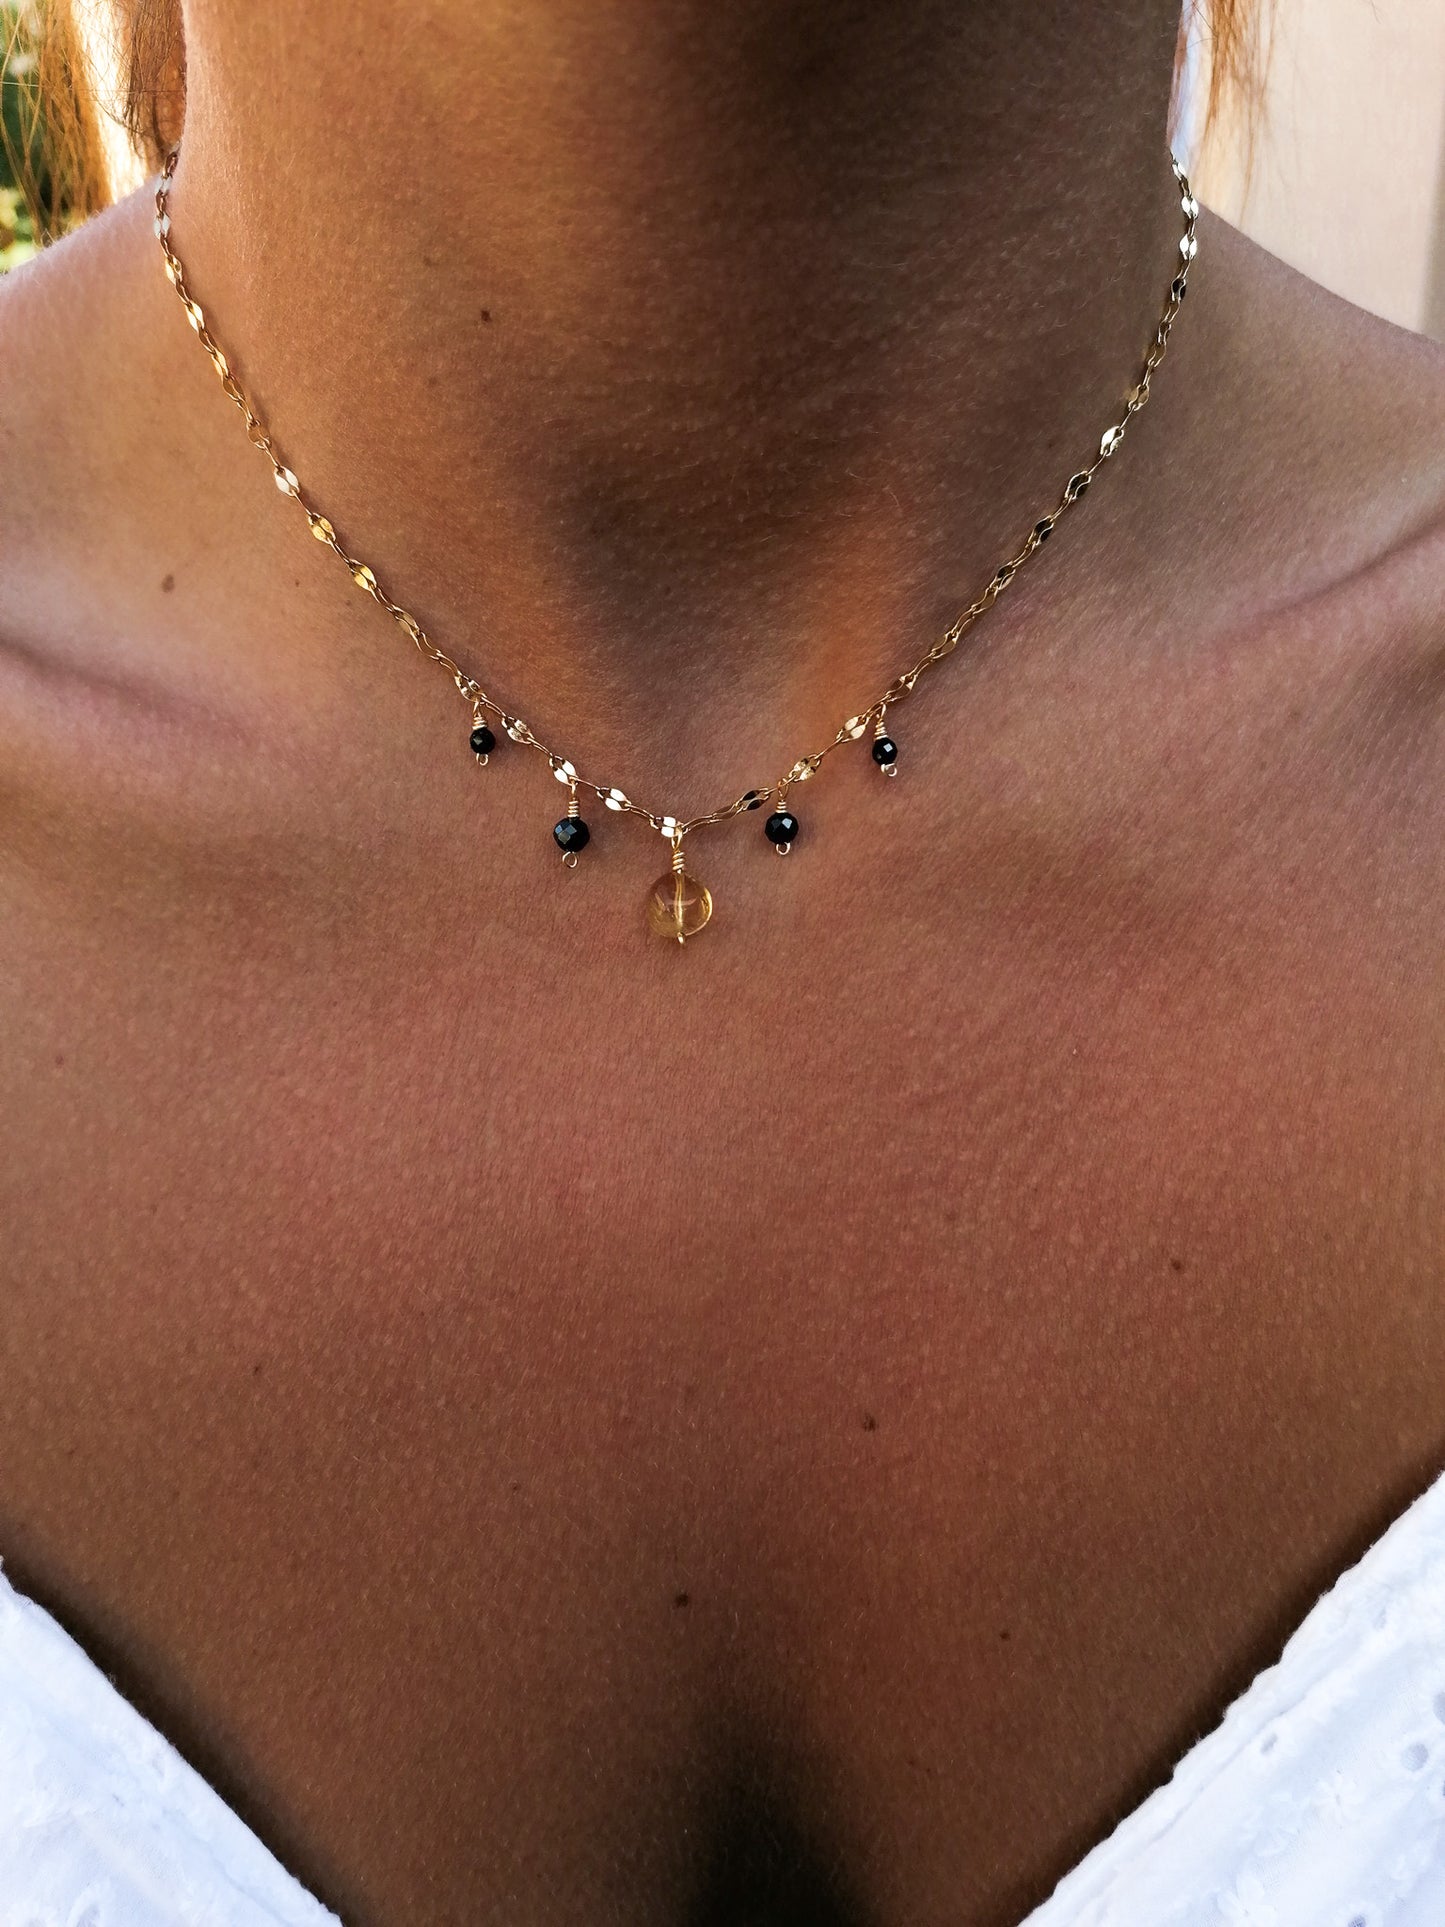 Erica necklace